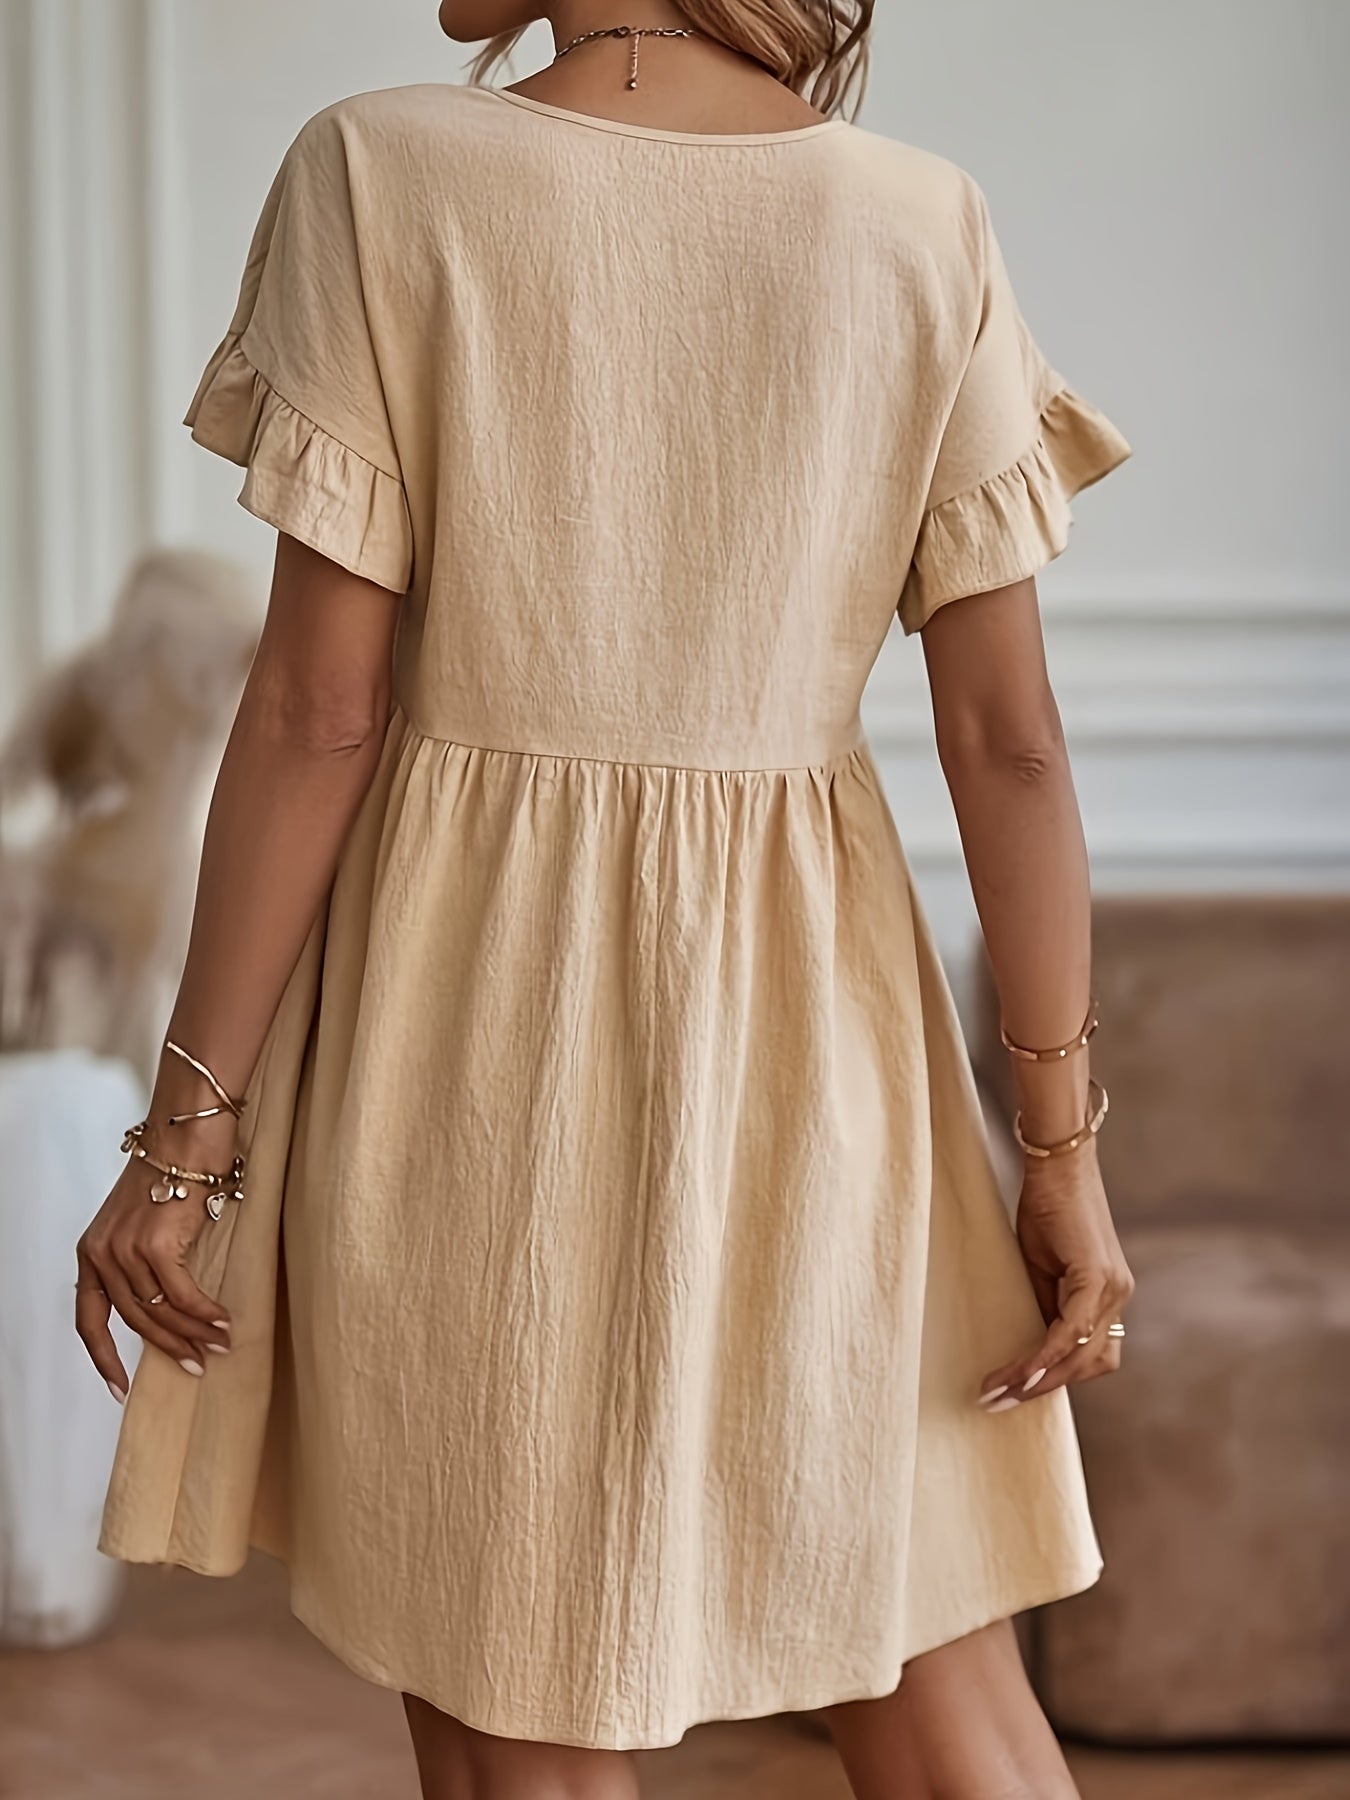 Elegant Solid Short Sleeve Mini Dress, Bohemian Cotton Mini Dress For Spring & Summer, Women's Clothing